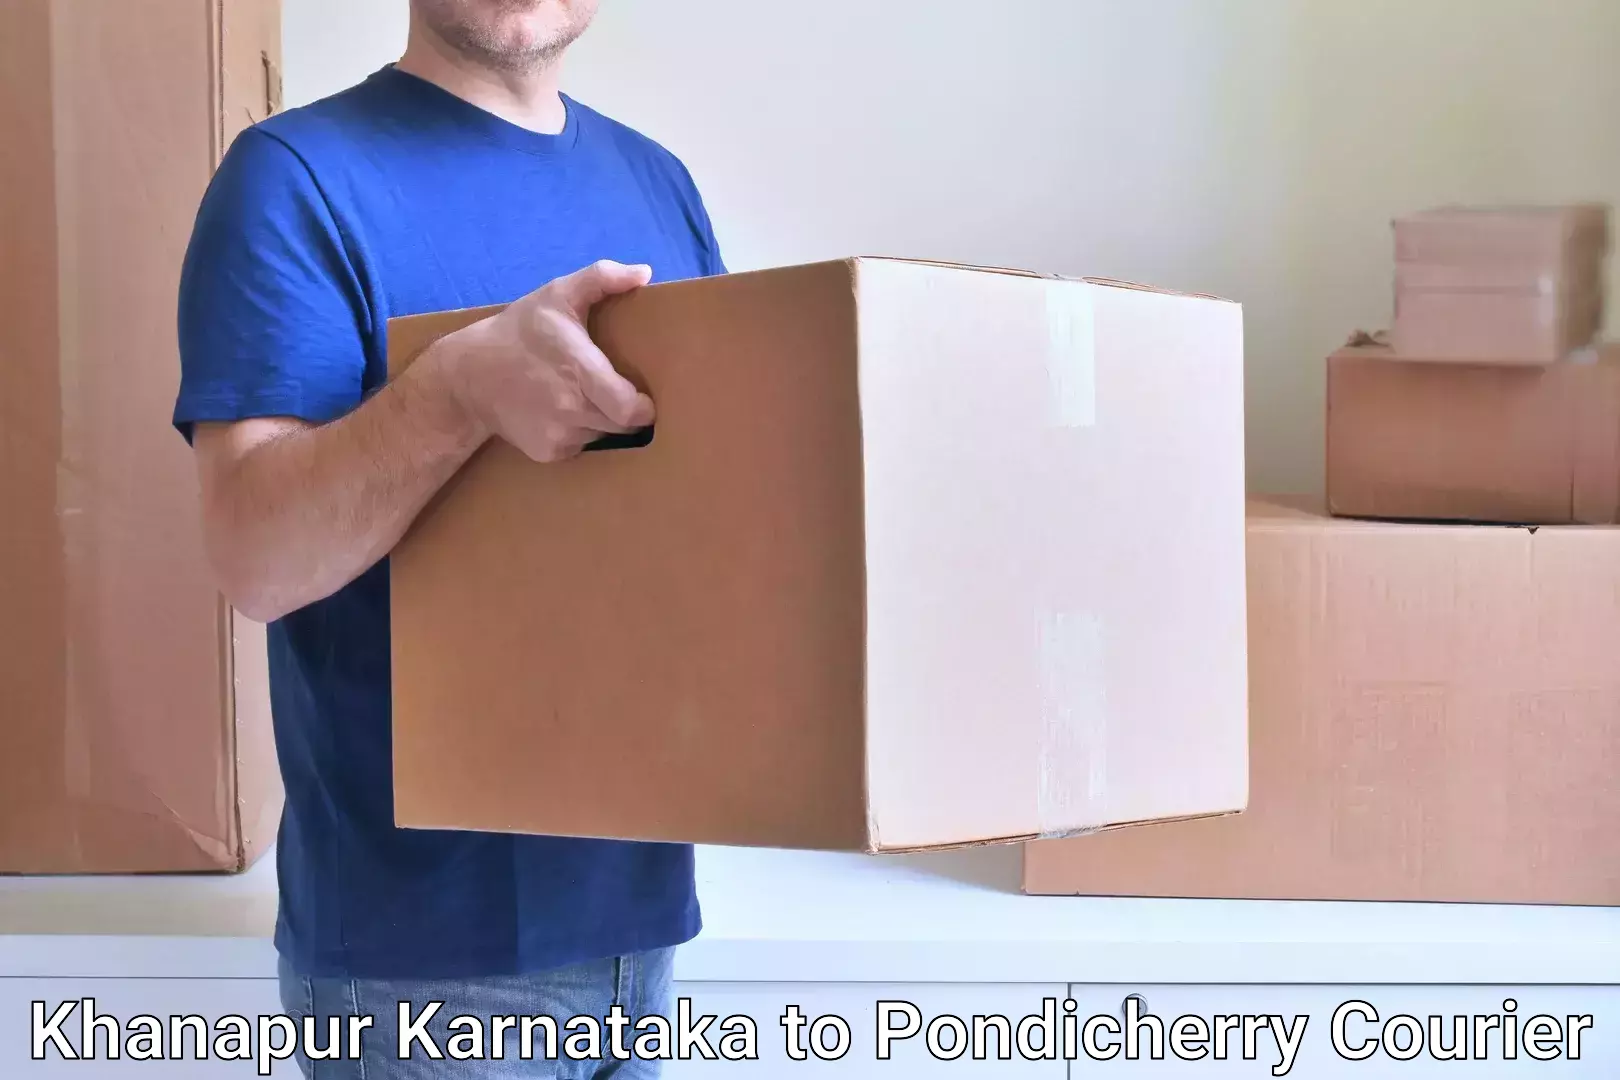 Package delivery network Khanapur Karnataka to Karaikal